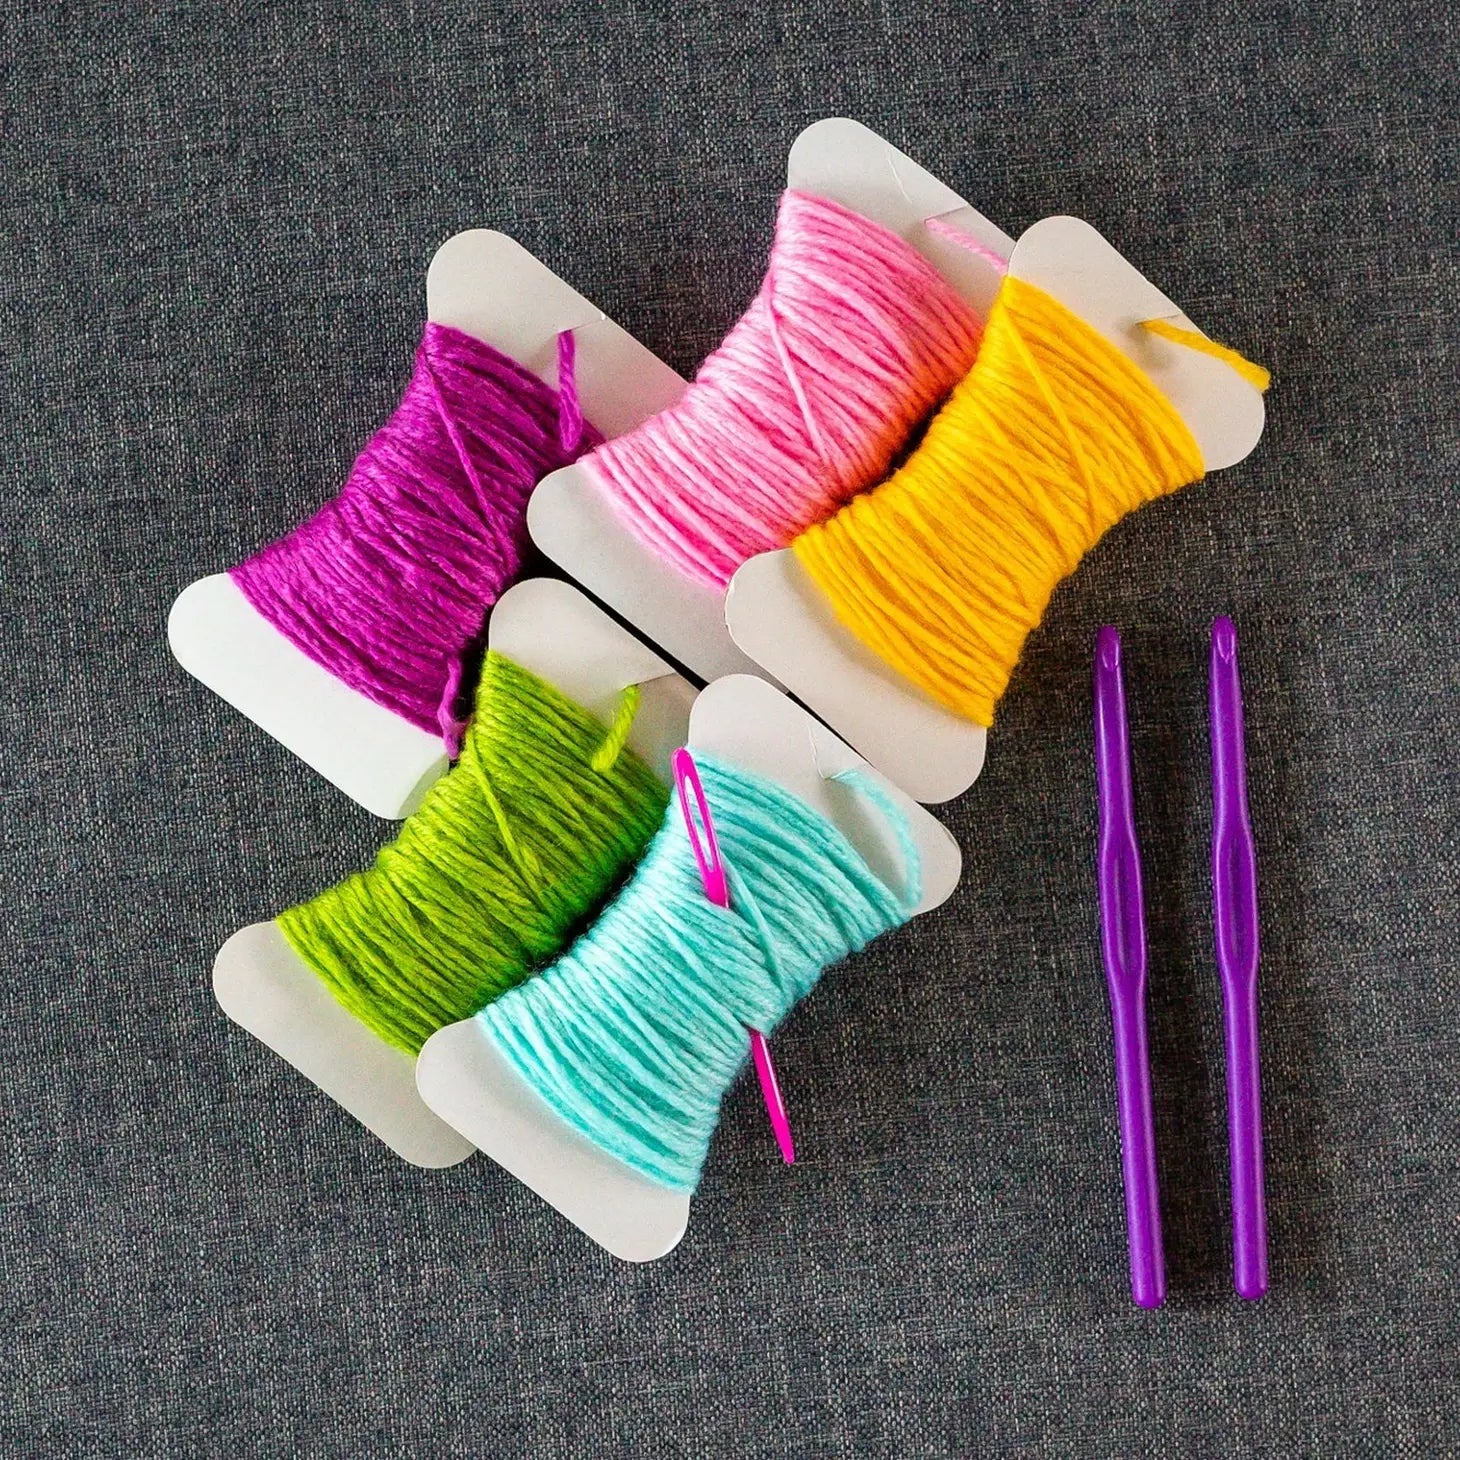 Easy To Do Crochet DIY Kit - Toy Smith